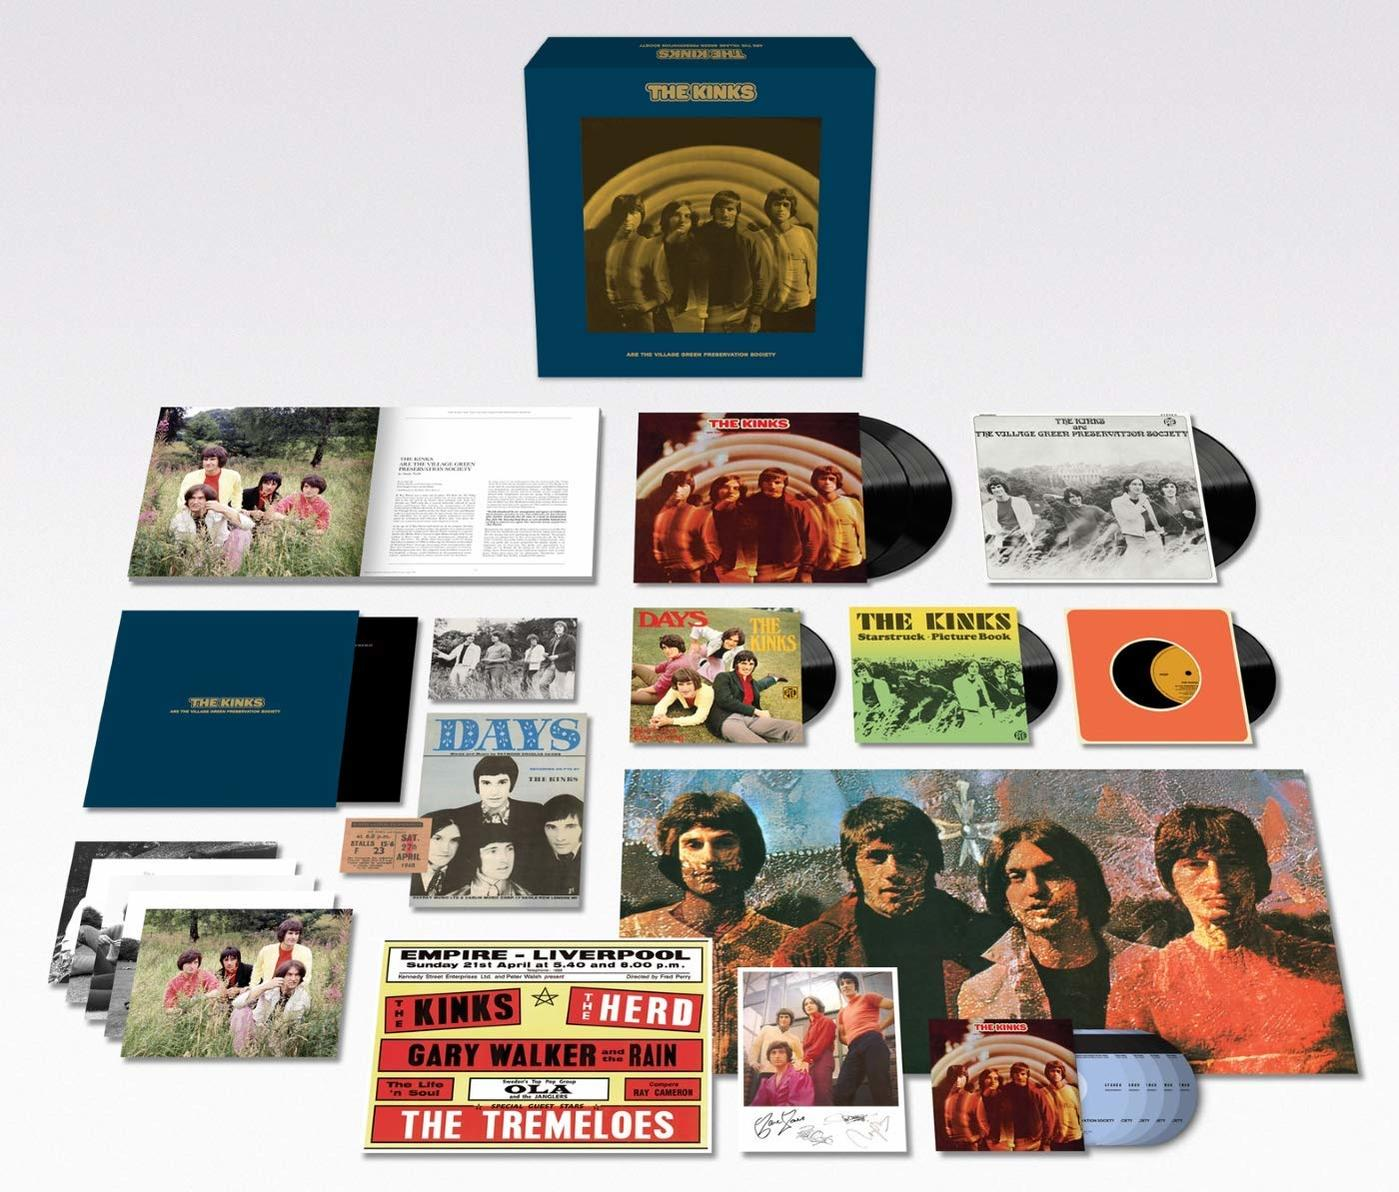 Society Preservation the + (LP Bonus-CD) Green Village Kinks Are - The -